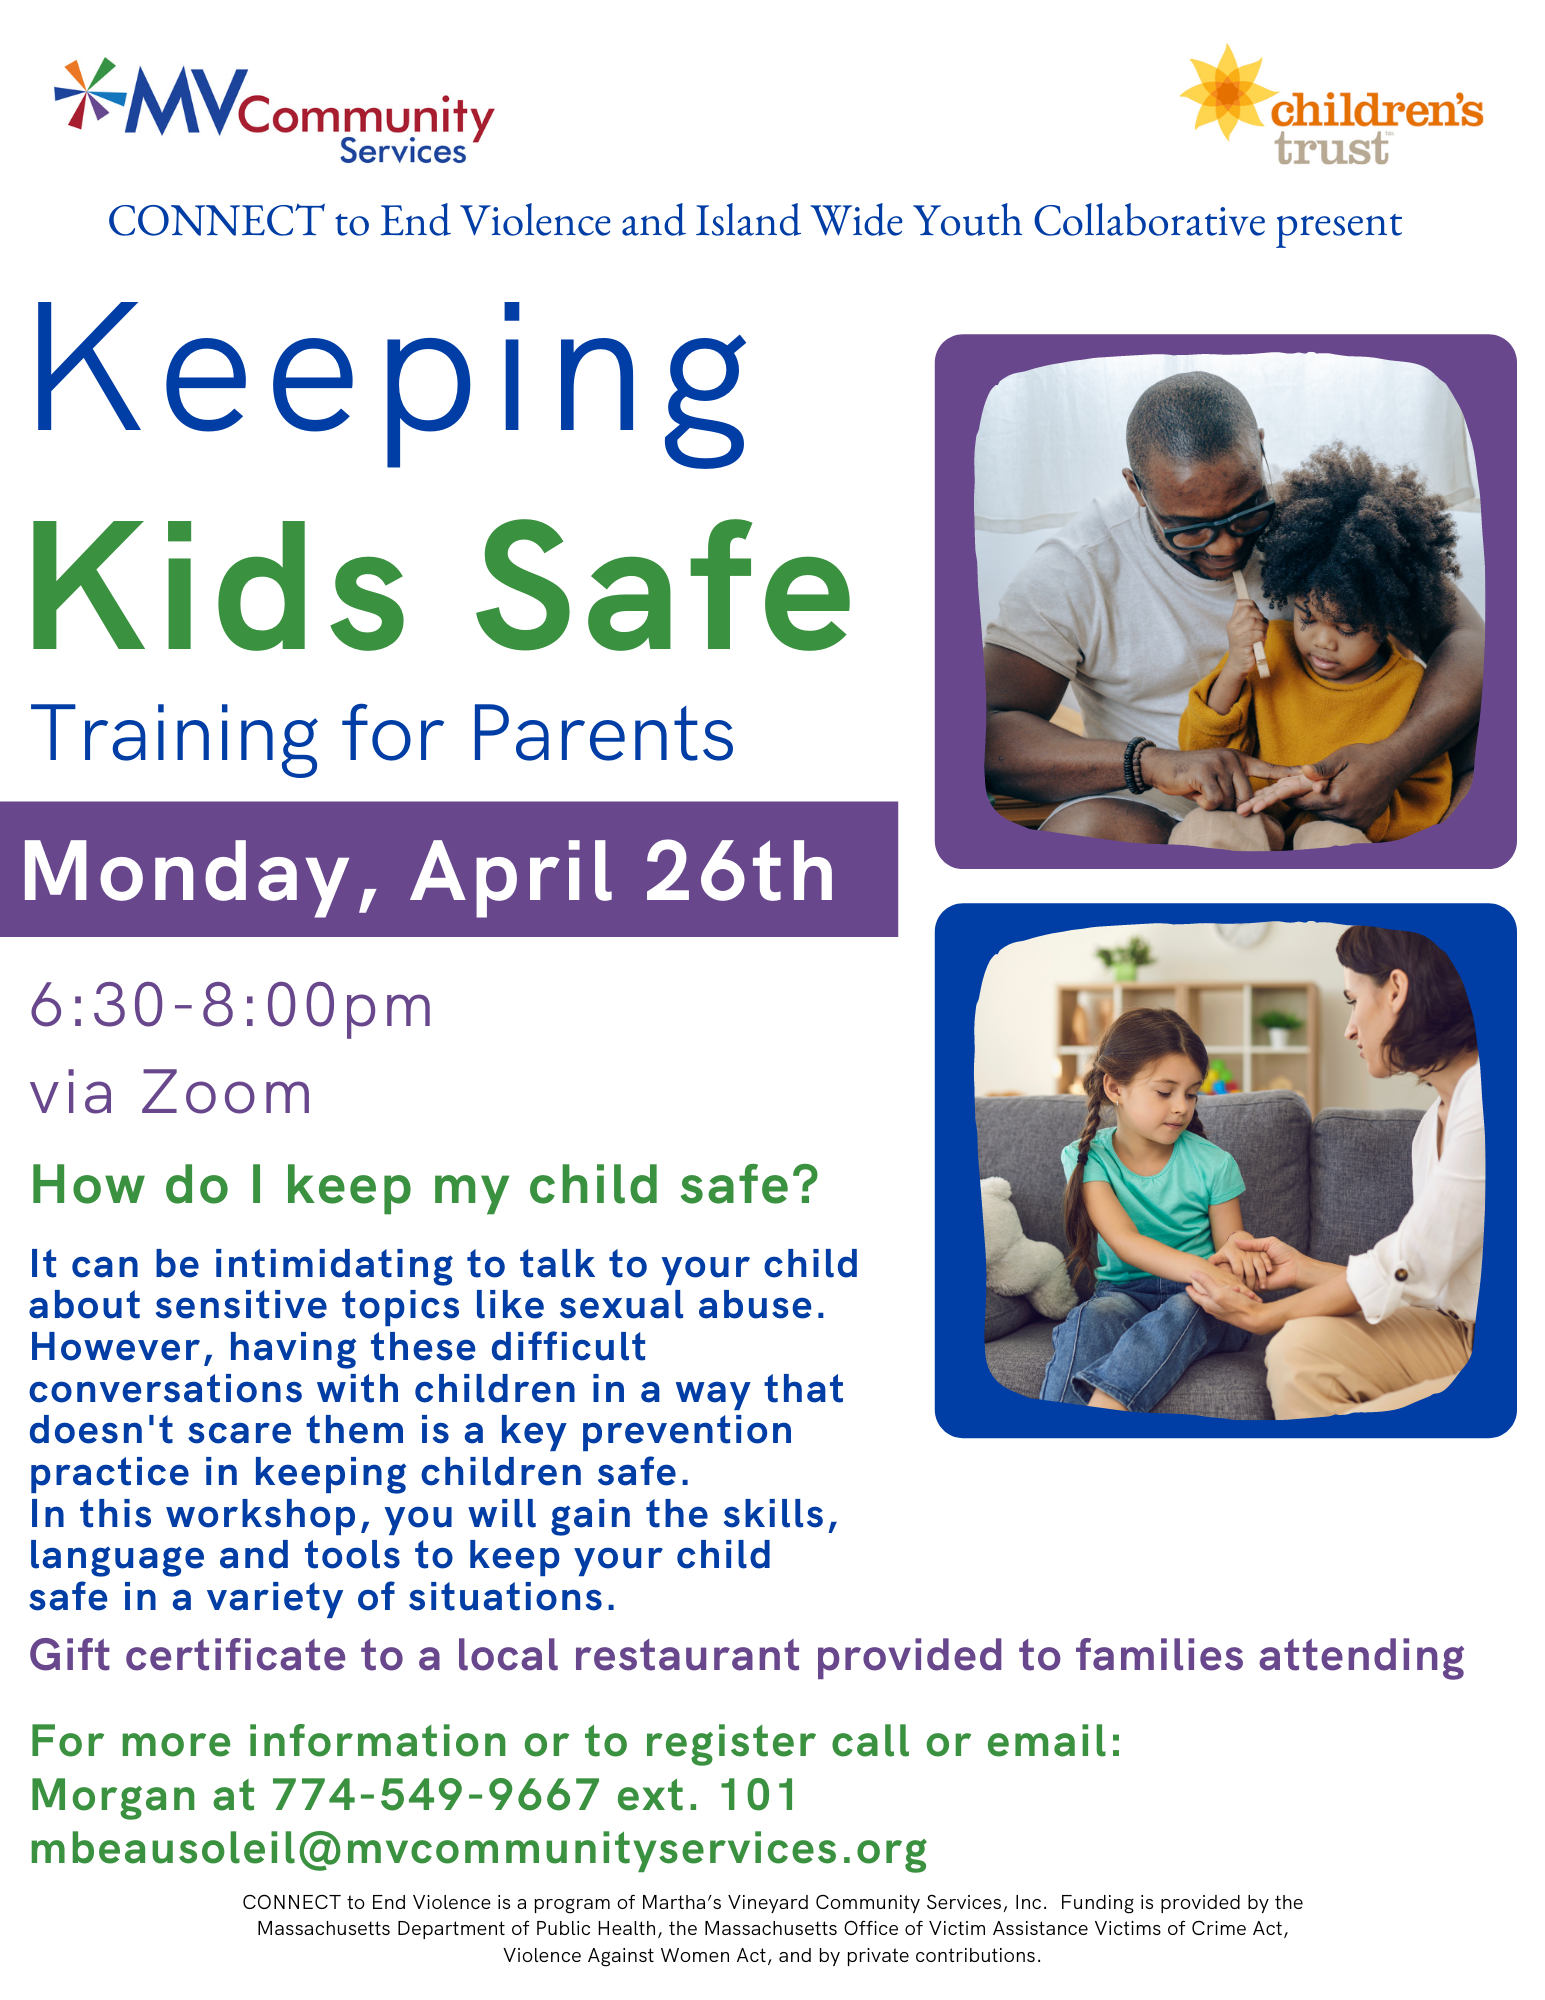 Keeping Kids Safe - Martha's Vineyard Community Services